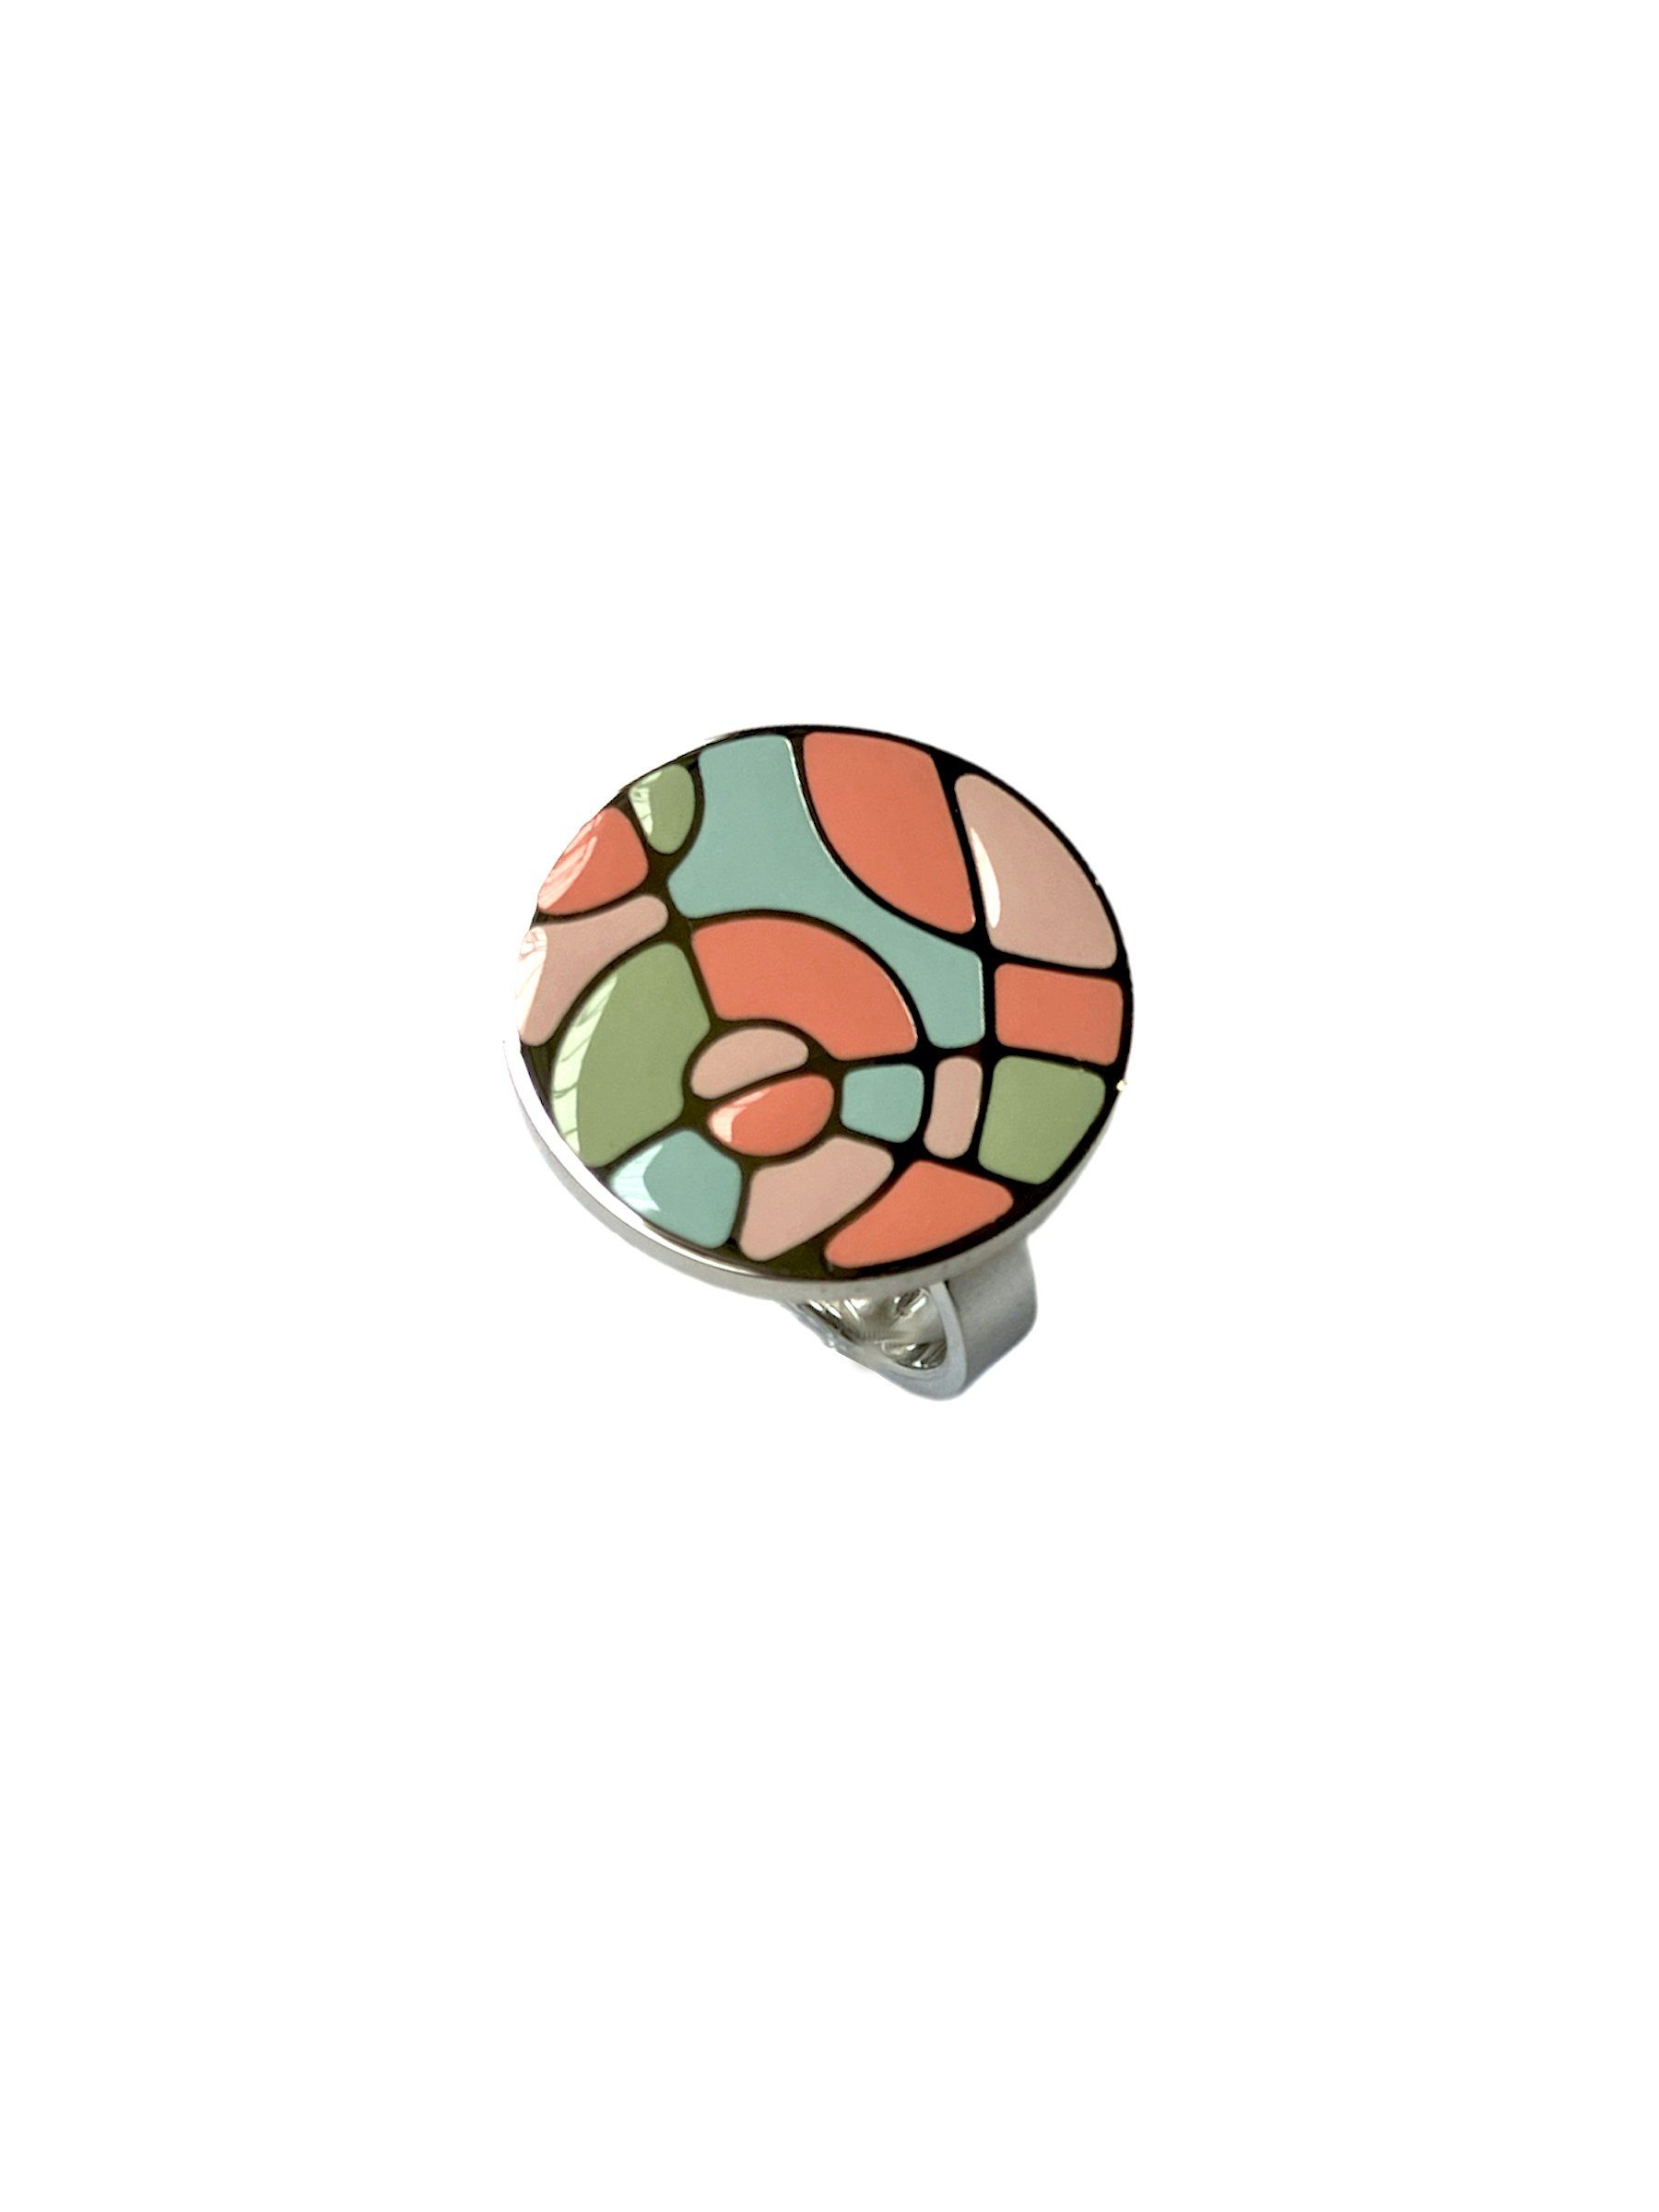 Swatch Bijoux Fingerring Moasik-Style im JRP029-6, Ringkopfdesign